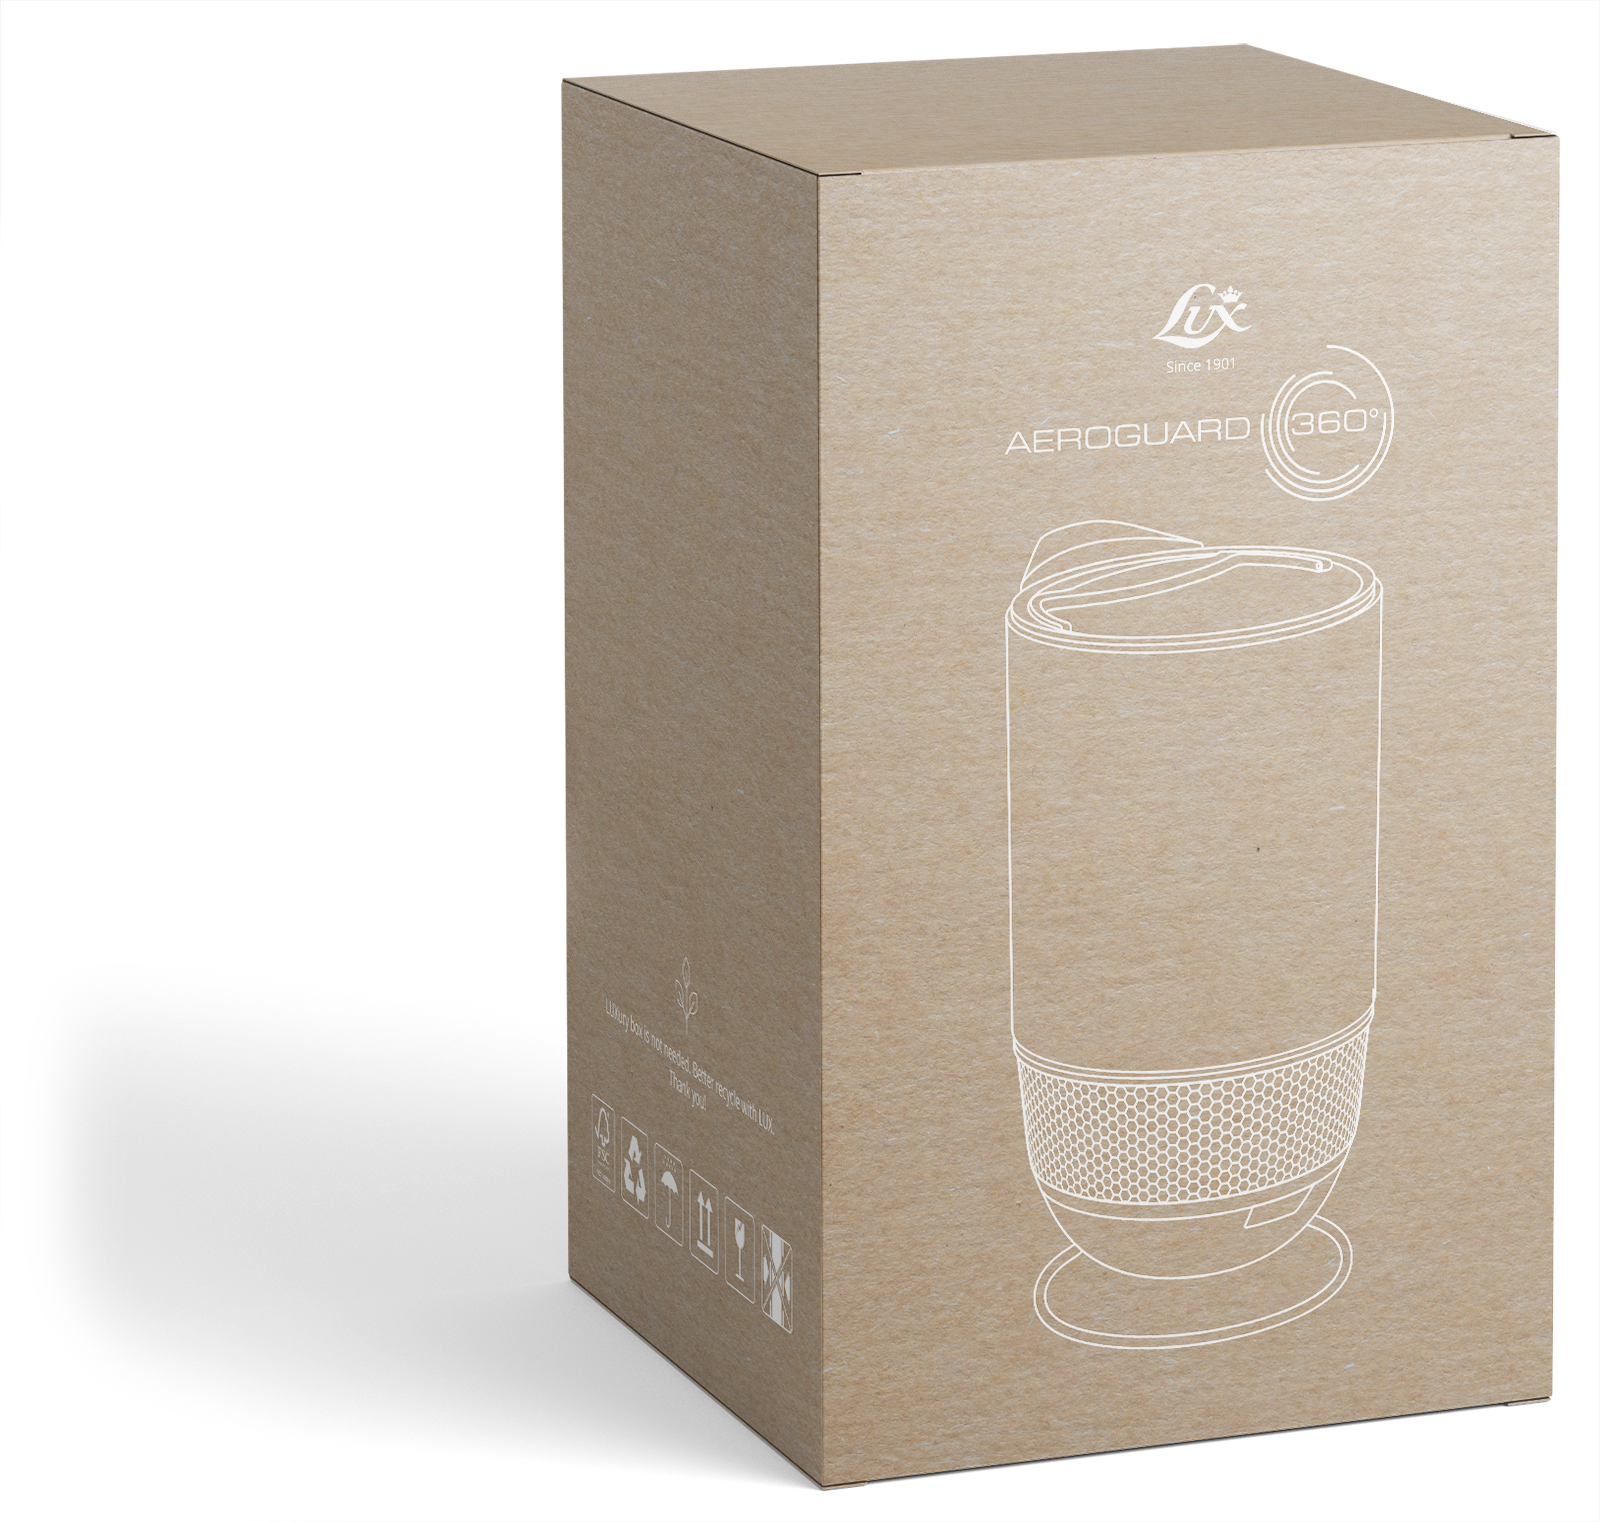 Lux Air Purifier packaging